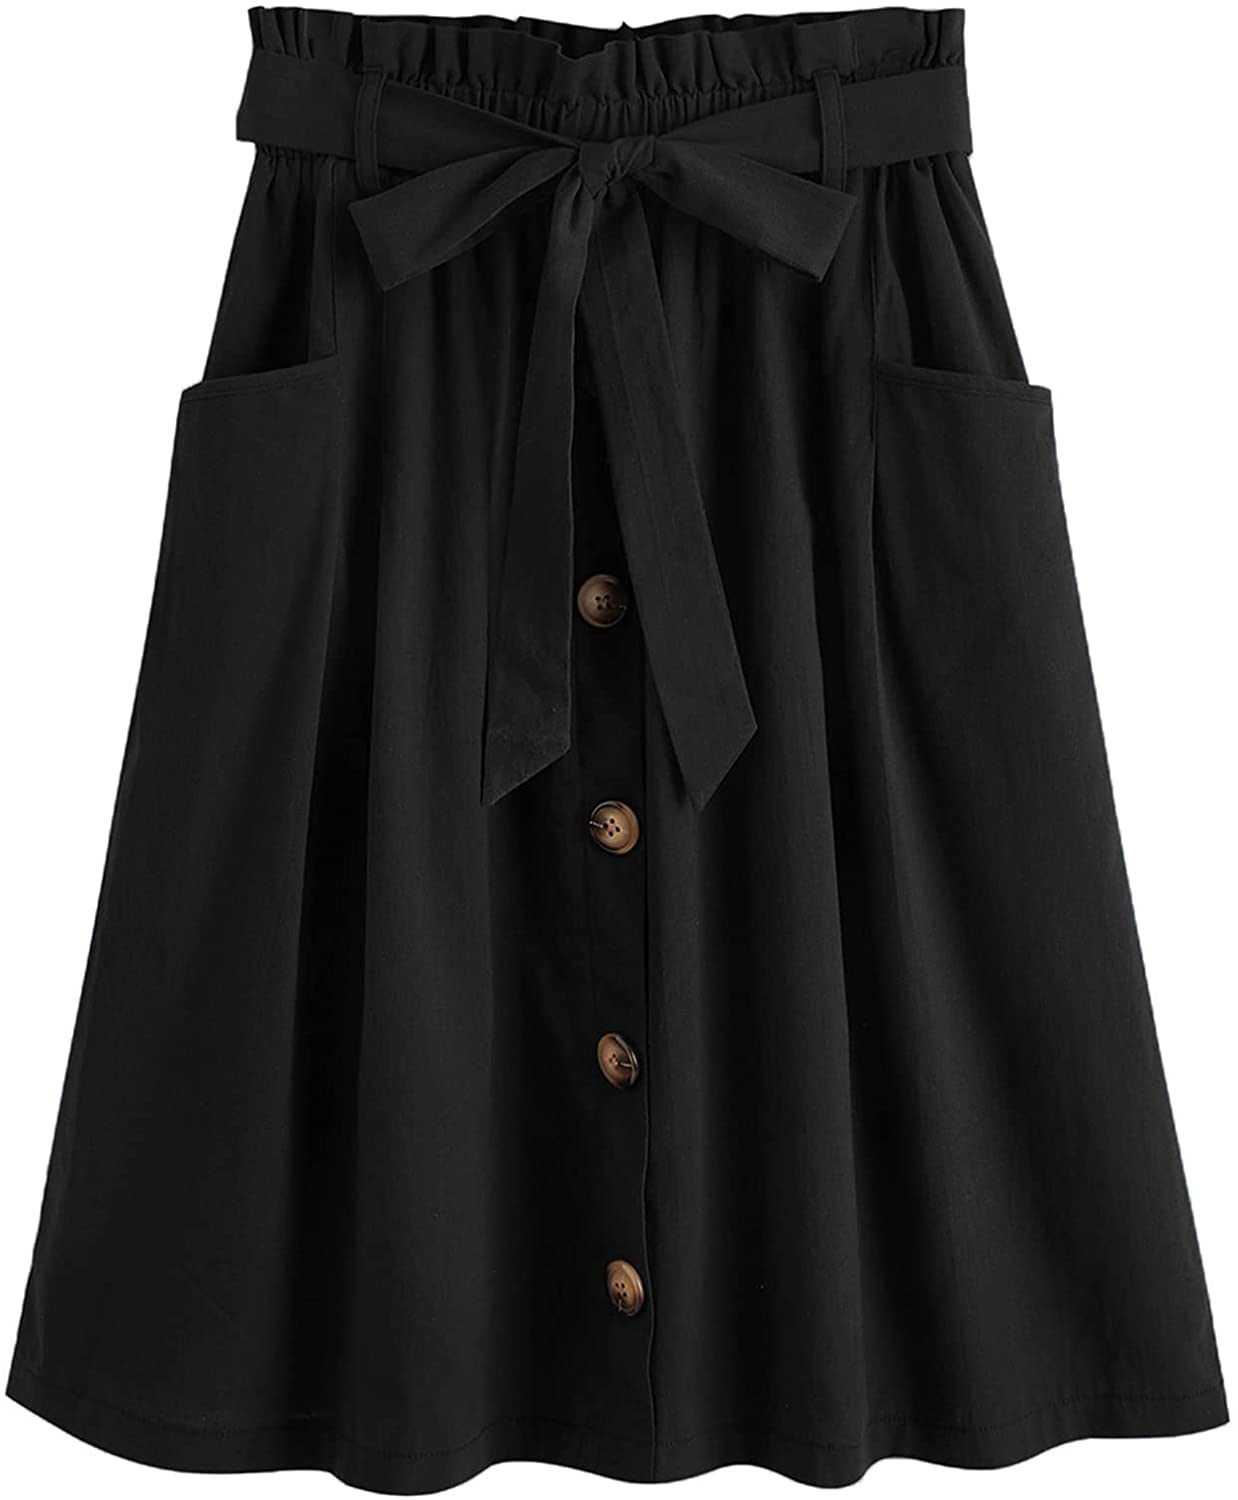 SweatyRocks Women's Casual High Waist Pleated A-Line Midi Skirt with Pocket